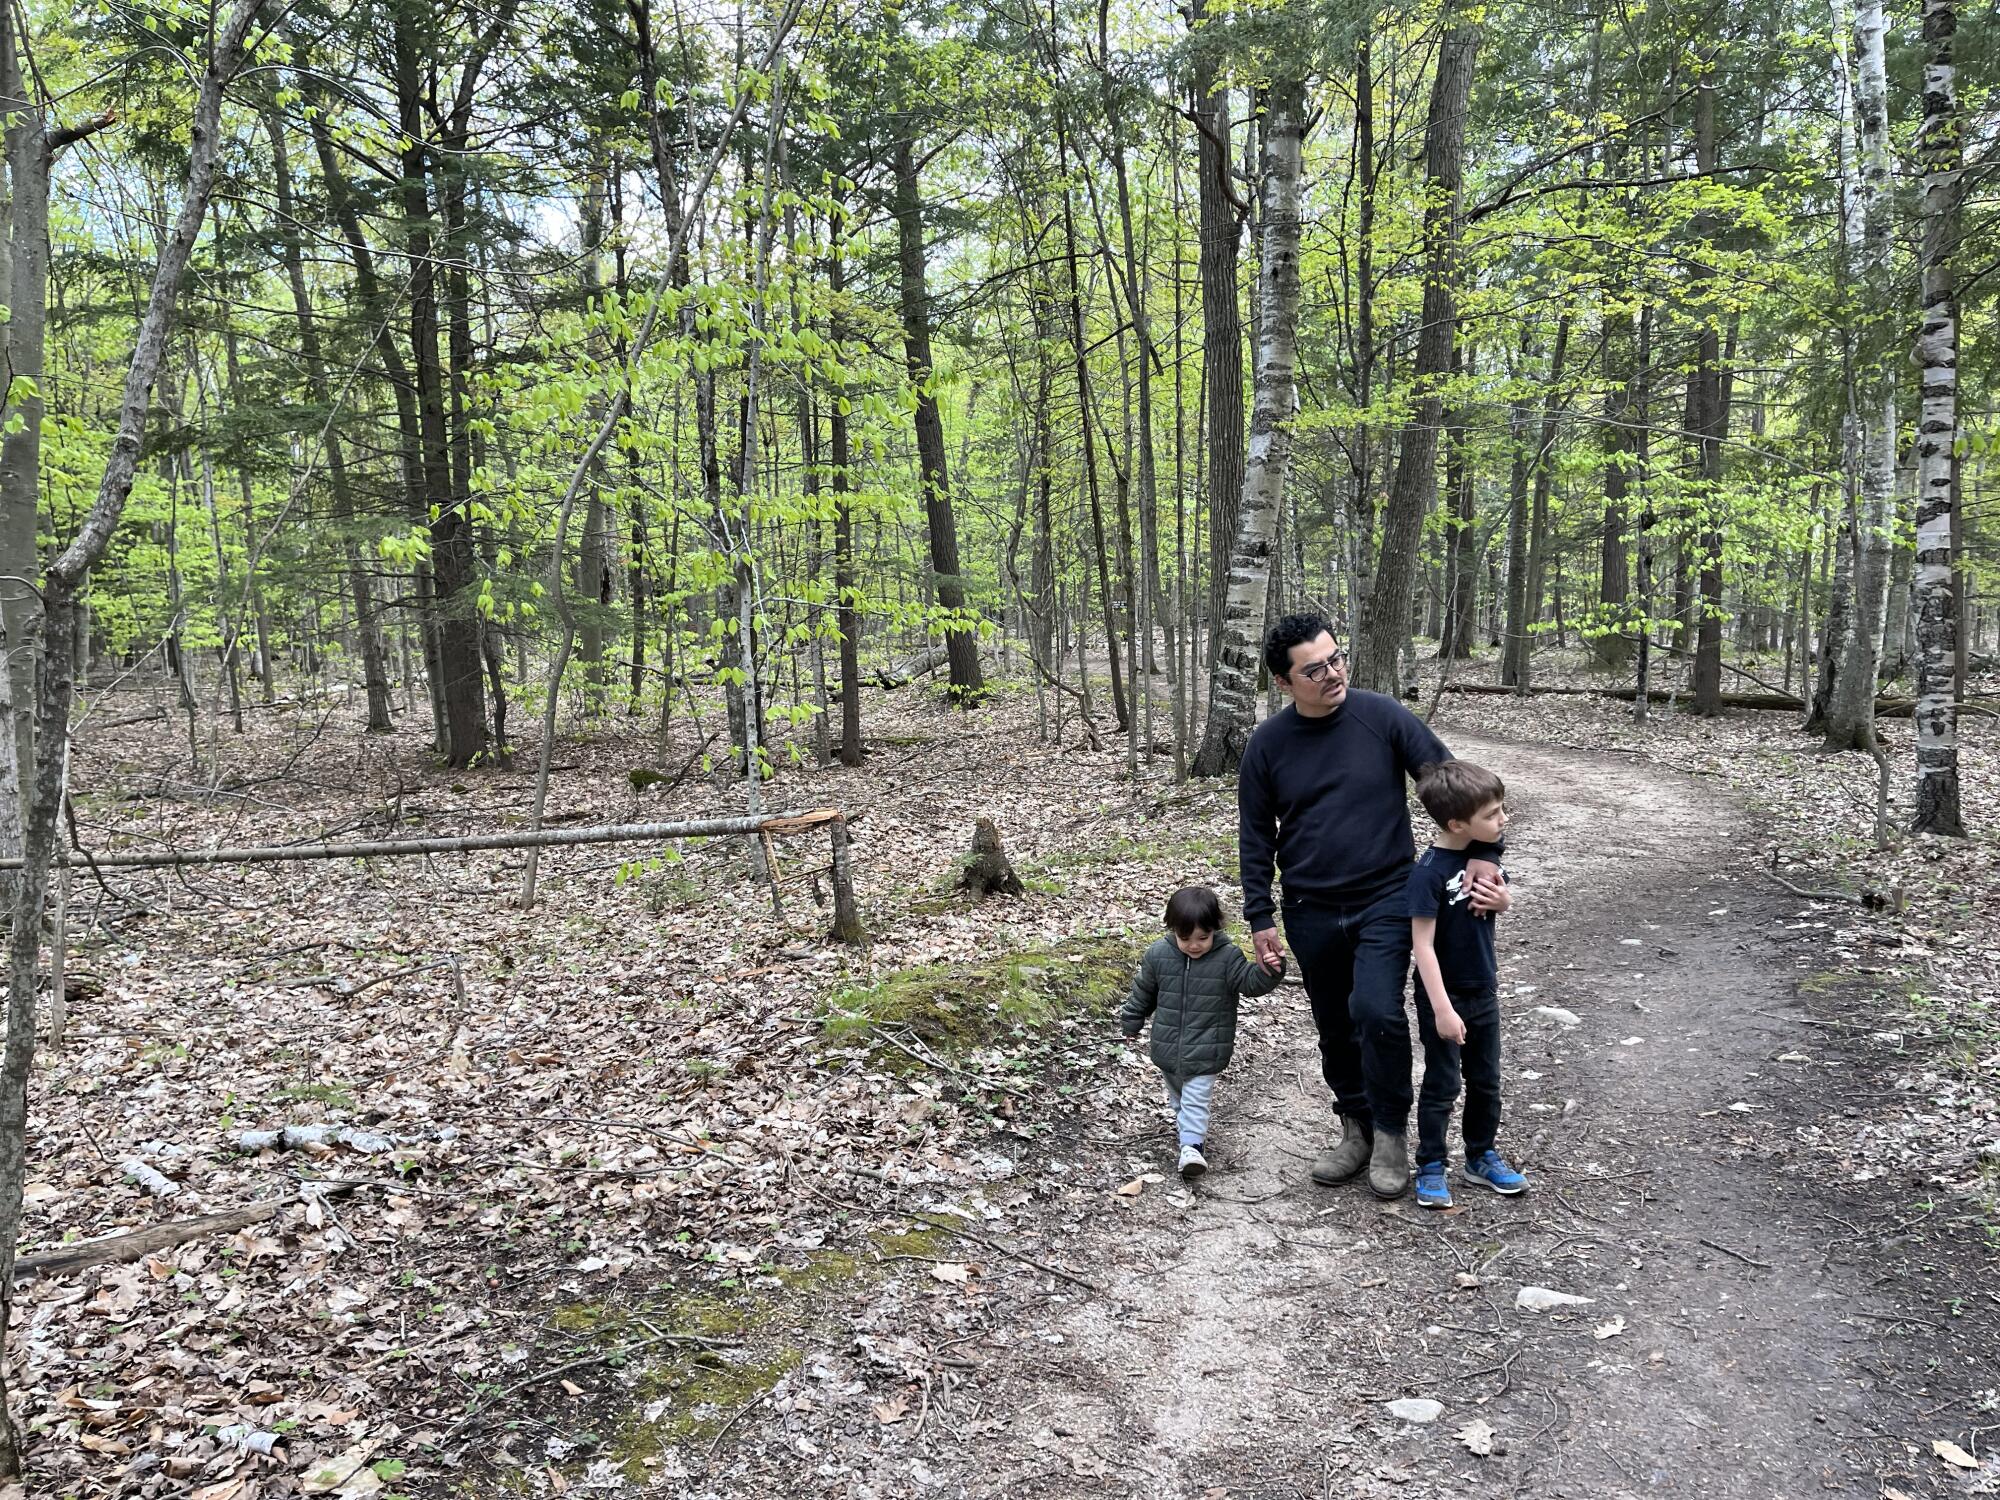 Carlos Salgado walks outdoors with two children.